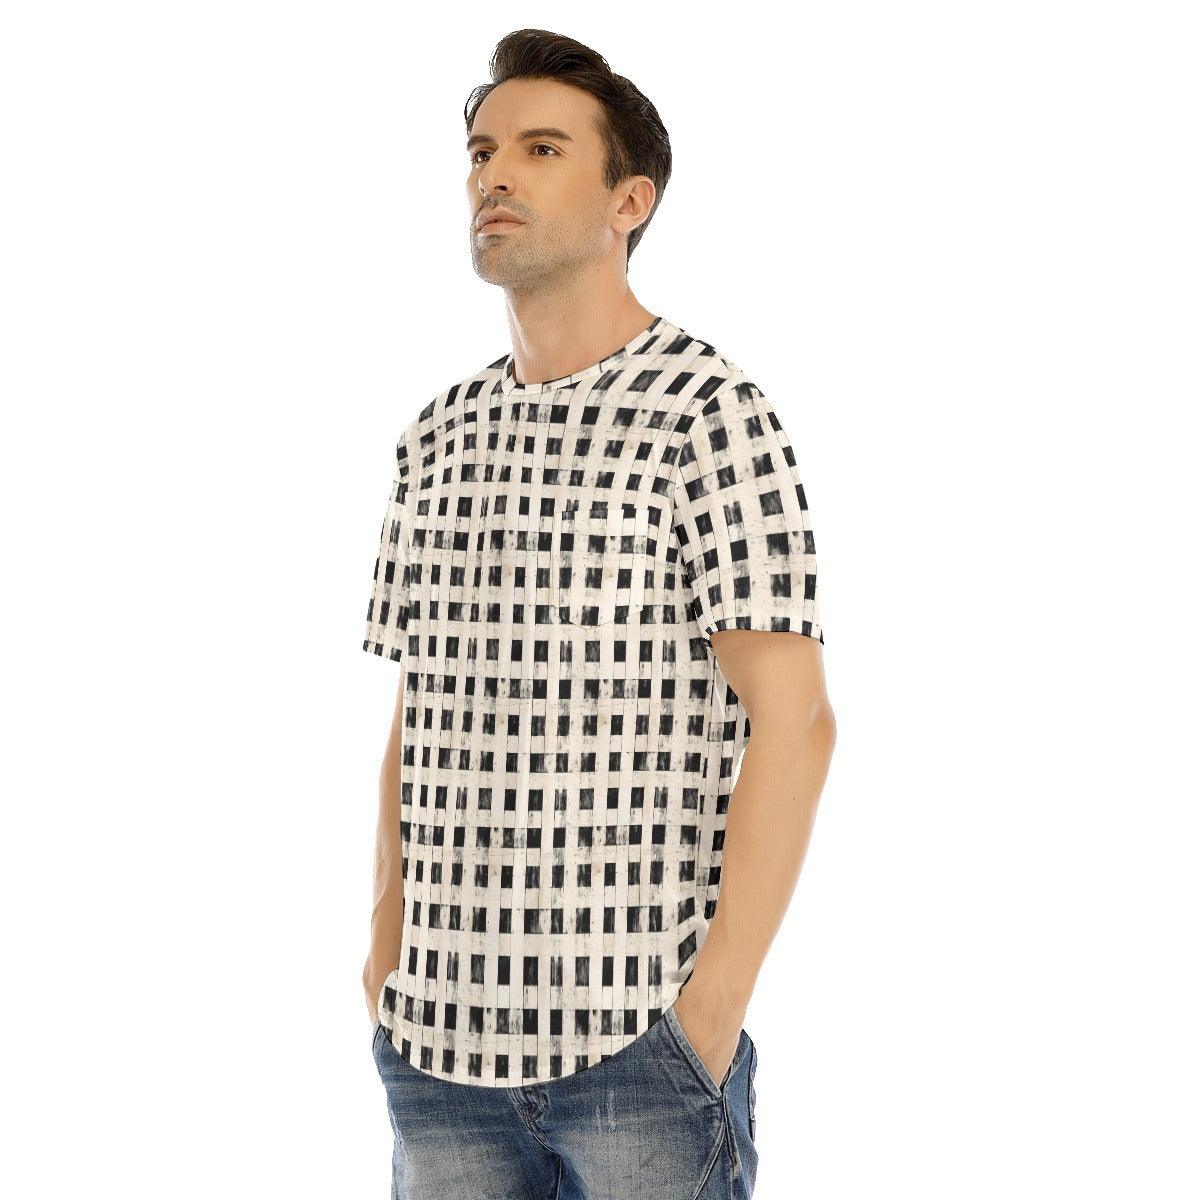 Men's Short Sleeve T-shirt With Curved Hem by Elementologie-Soltero - Elementologie